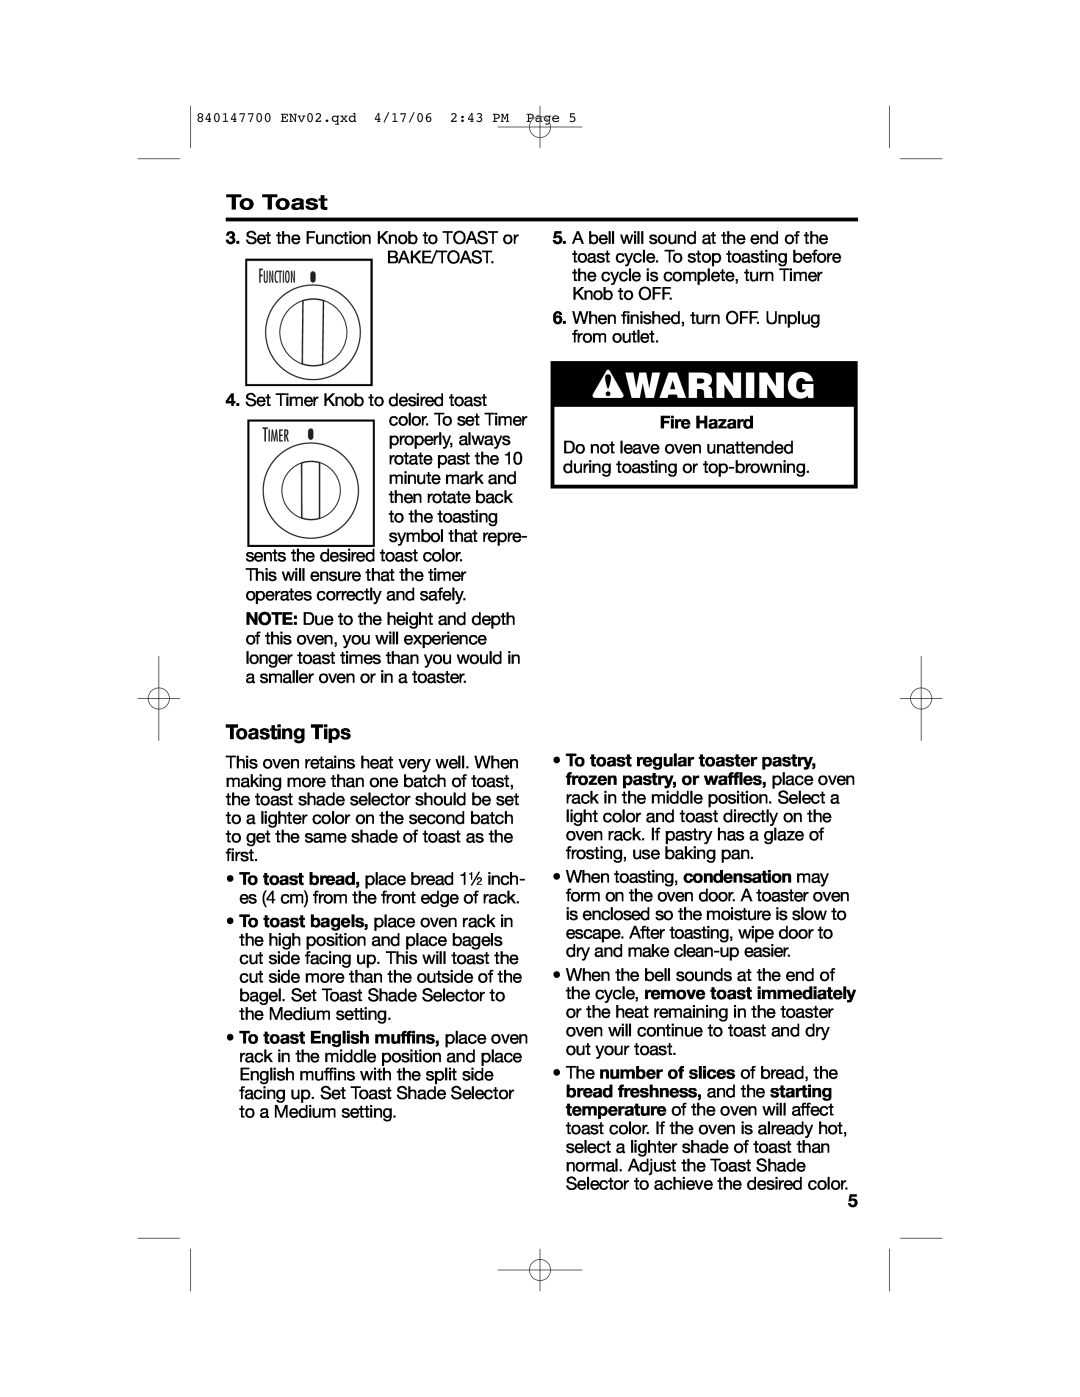 Hamilton Beach 31180 manual Toasting Tips, Fire Hazard, wWARNING, To Toast 